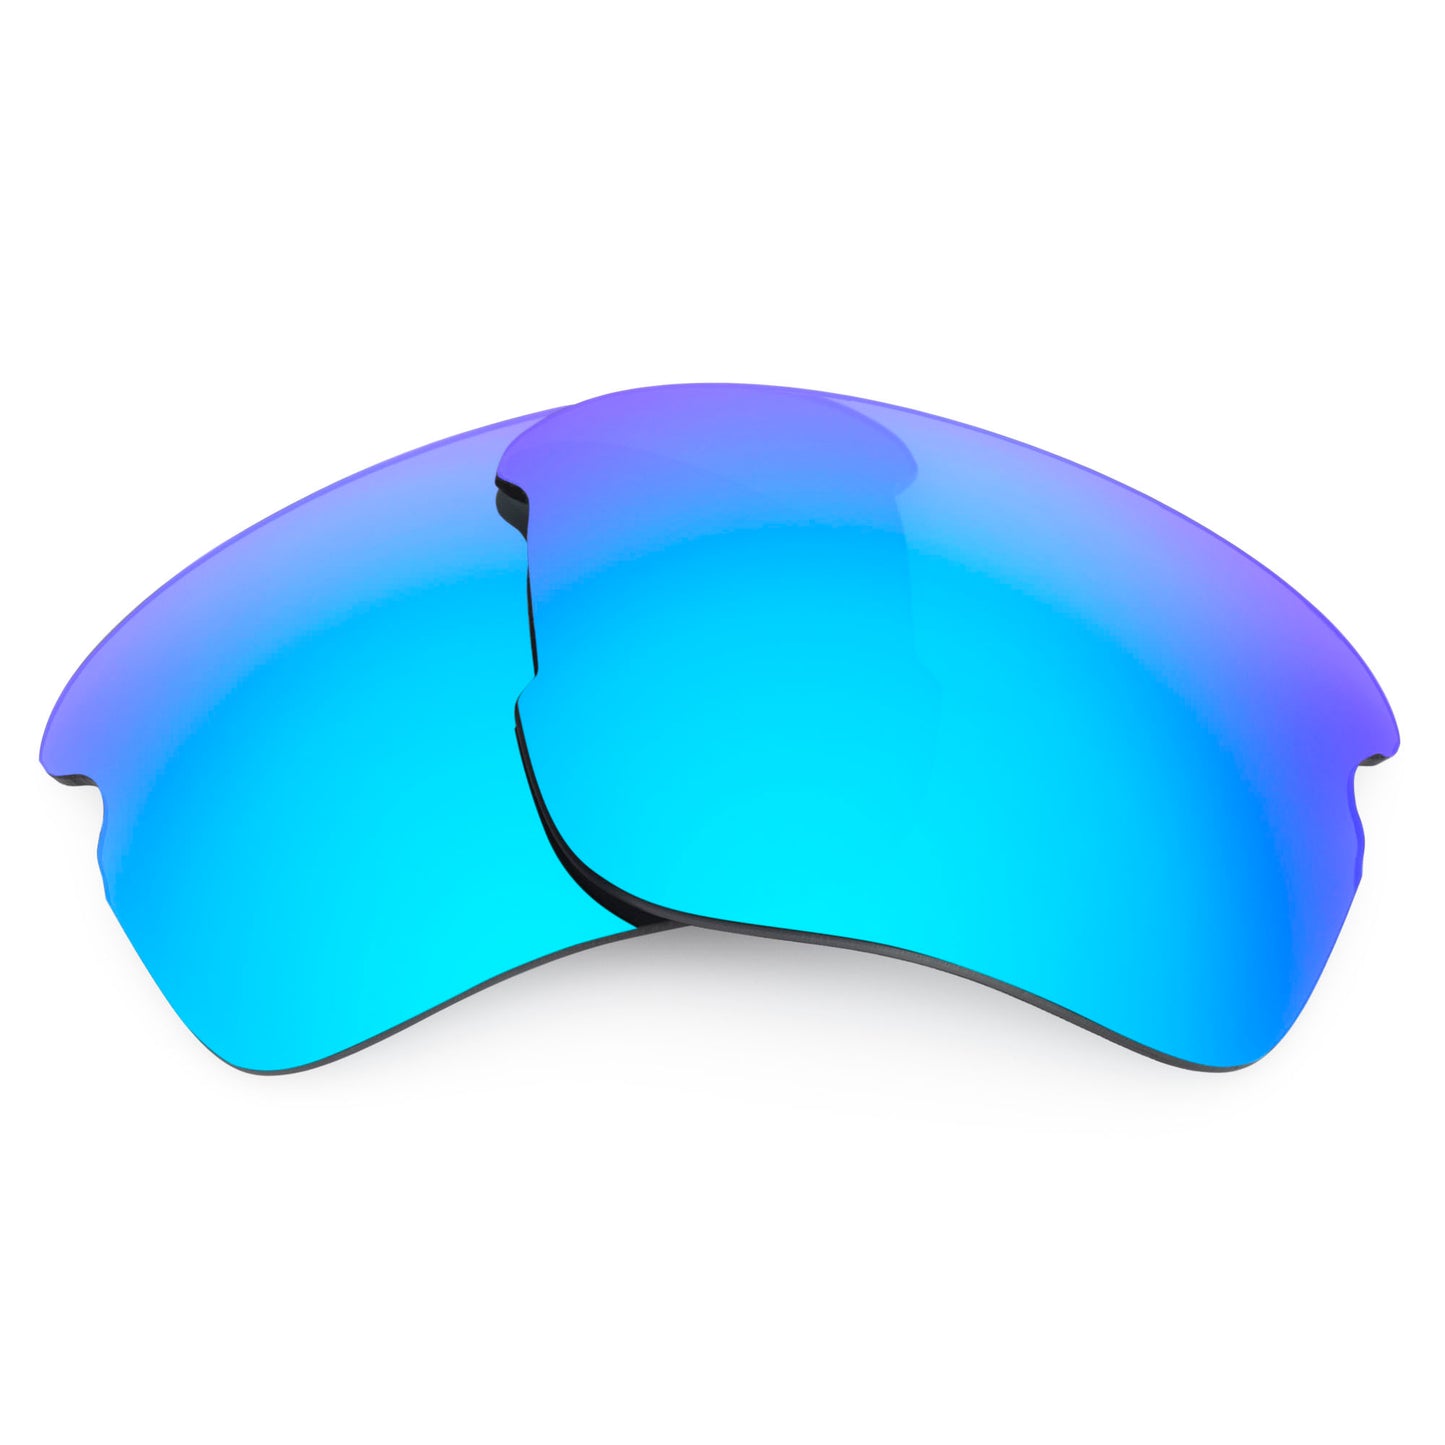 Revant replacement lenses for Oakley Flak XS (Exclusive Shape) Non-Polarized Ice Blue